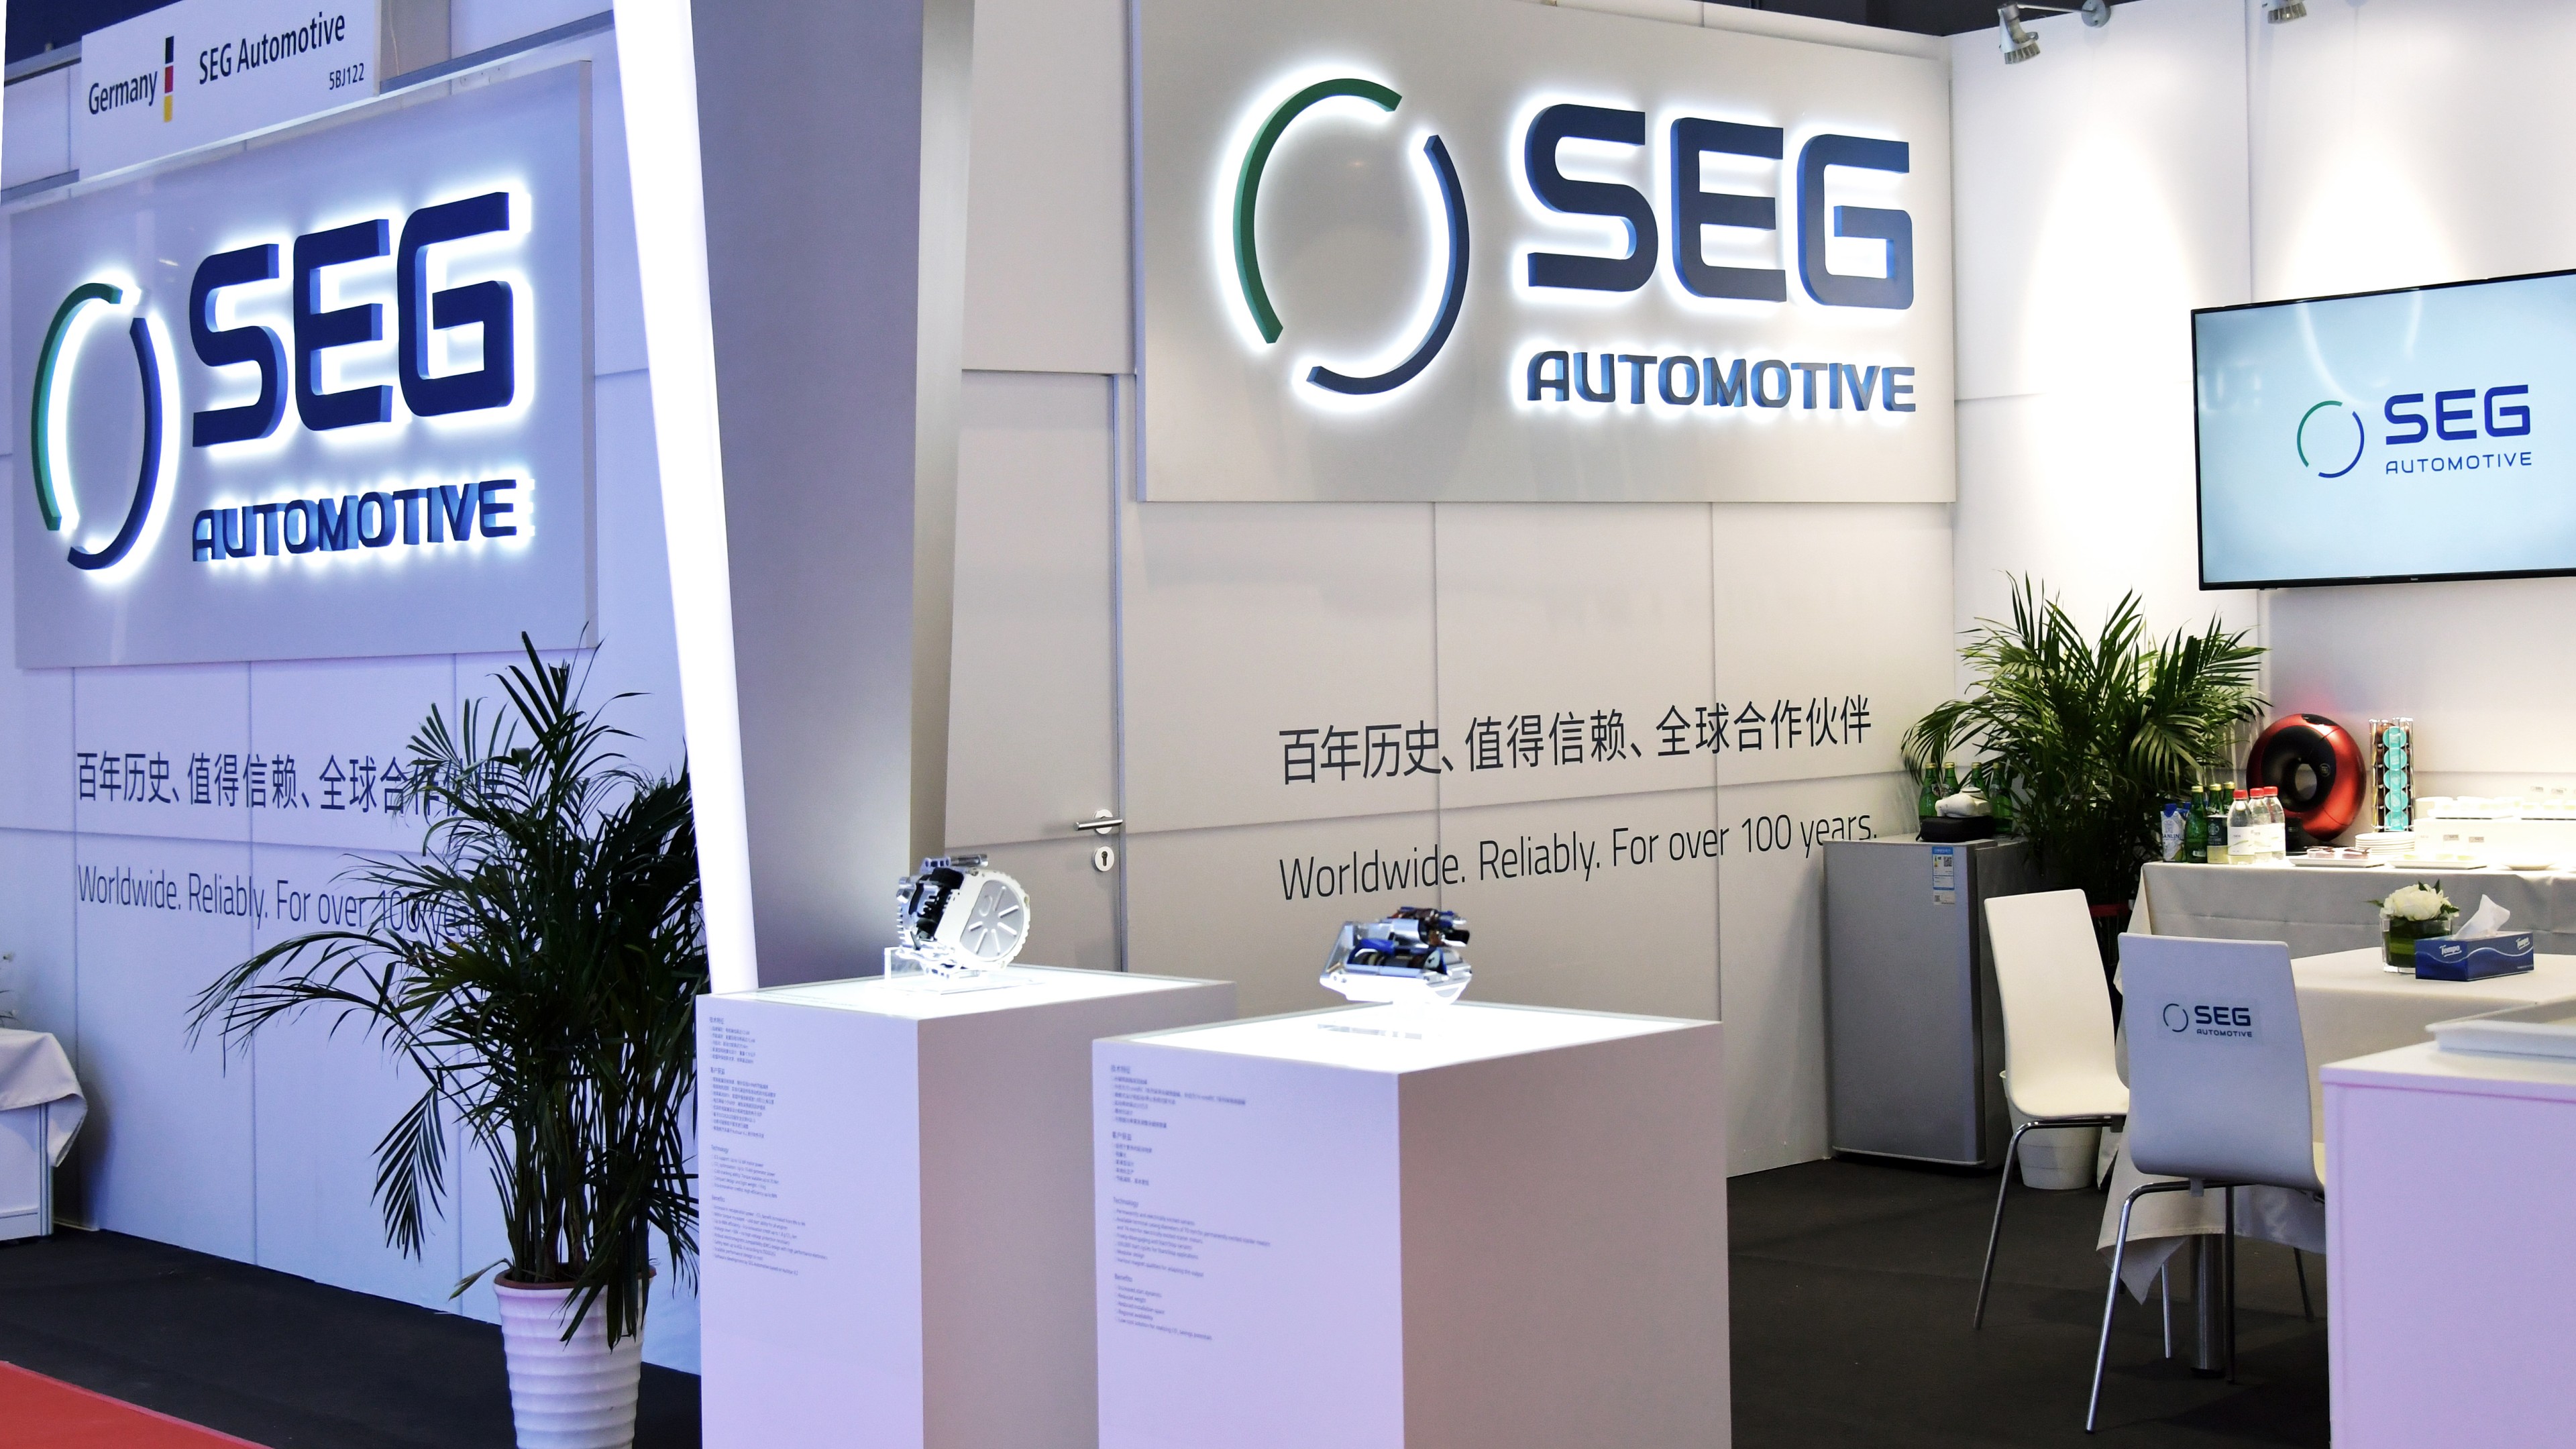 Auto Shanghai exhibition booth of SEG Automotive